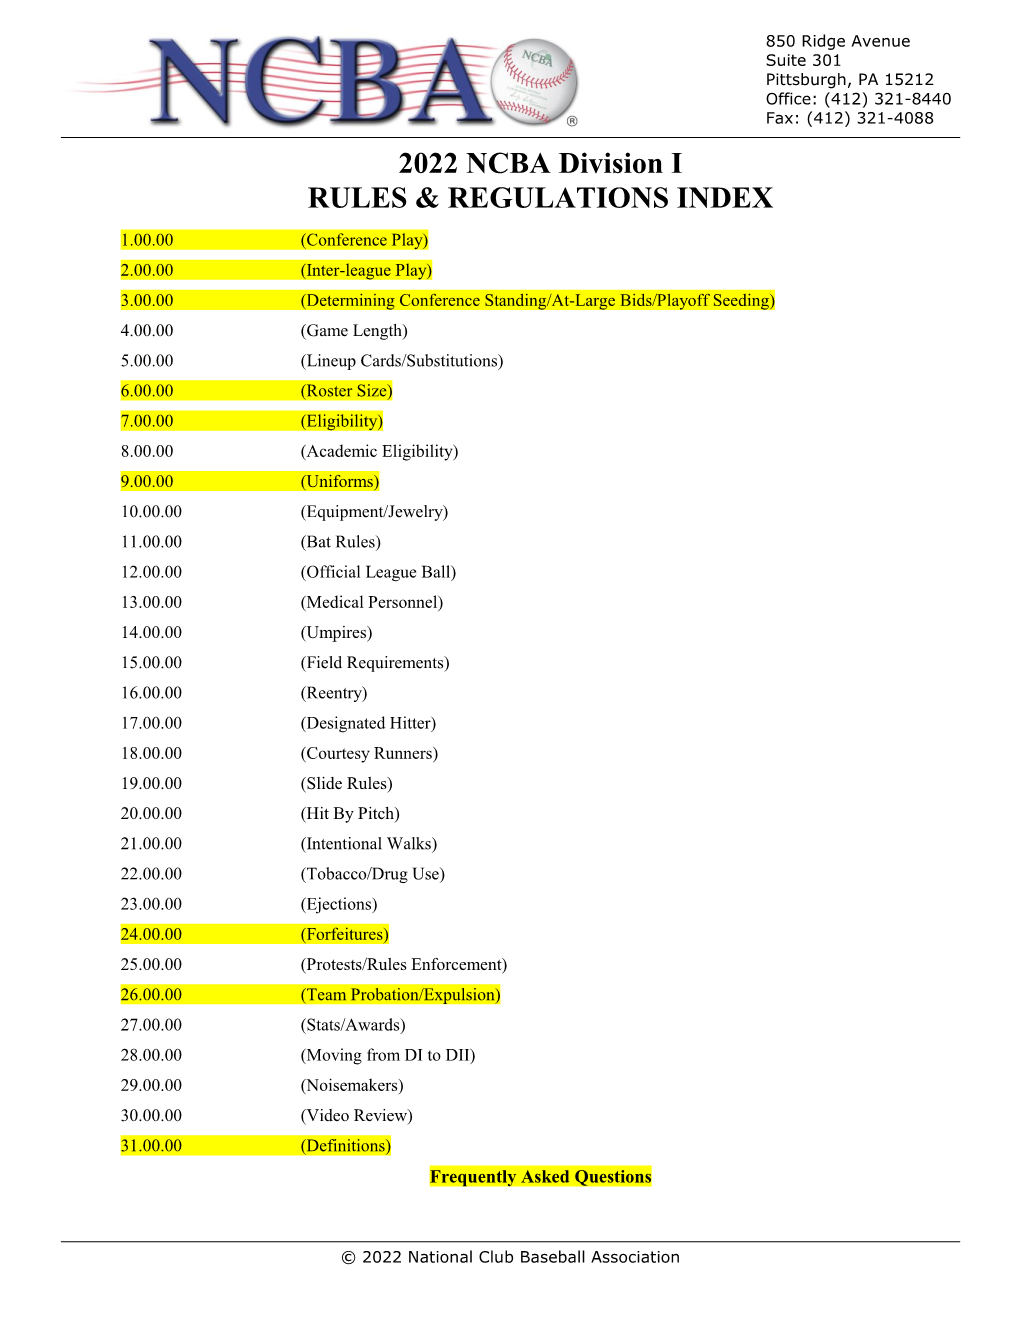 2022 NCBA Division I RULES & REGULATIONS INDEX